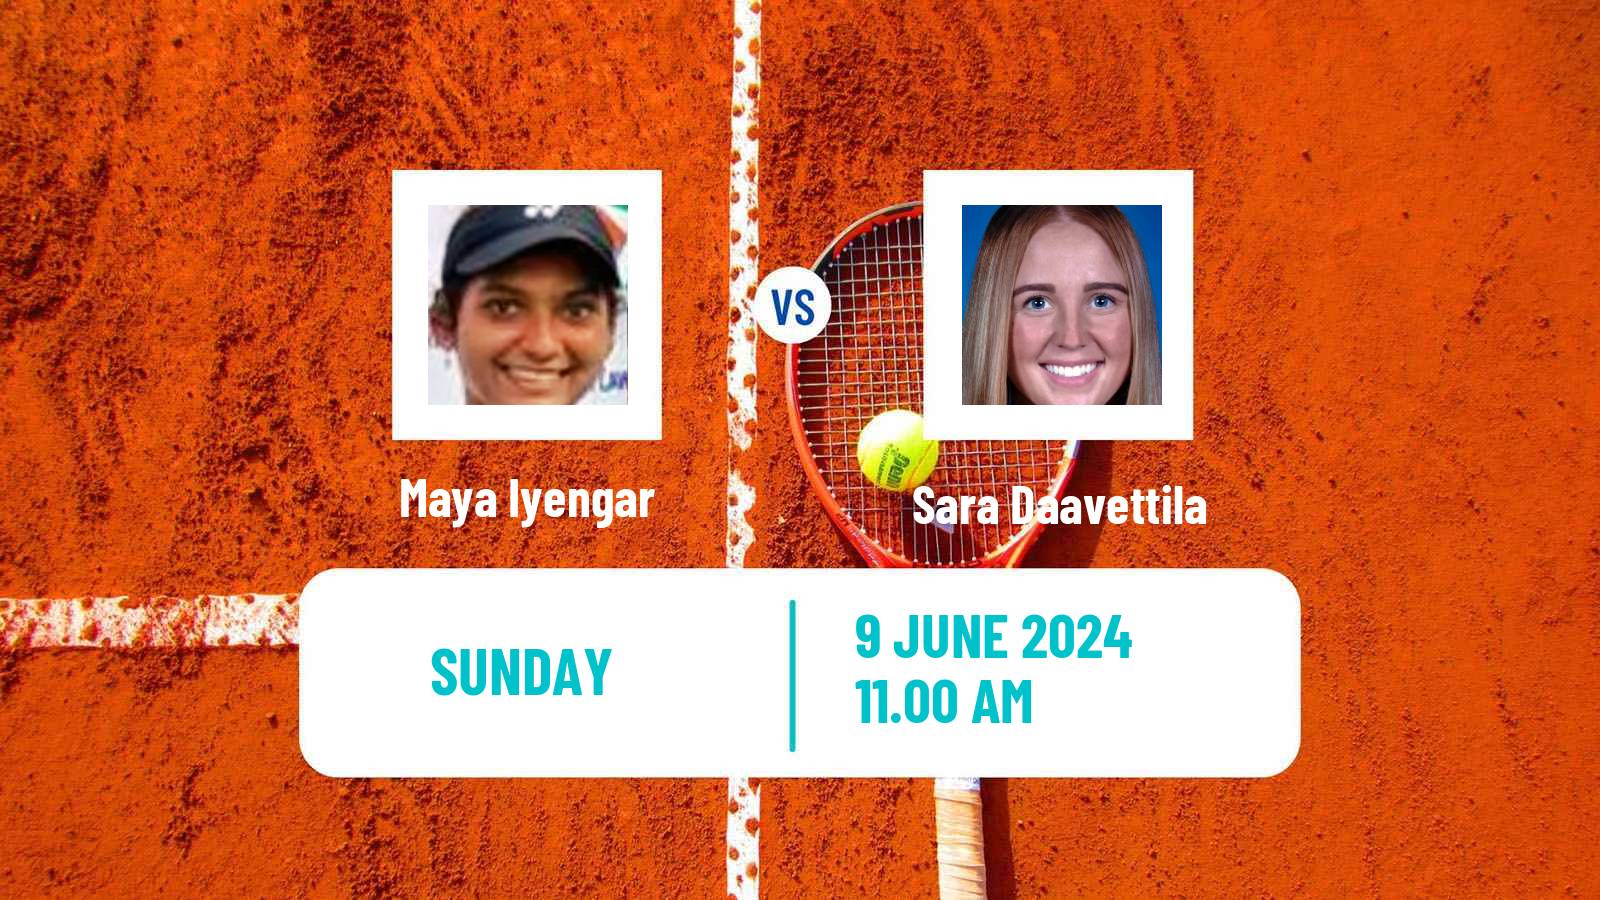 Tennis ITF W15 San Diego Ca 2 Women Maya Iyengar - Sara Daavettila